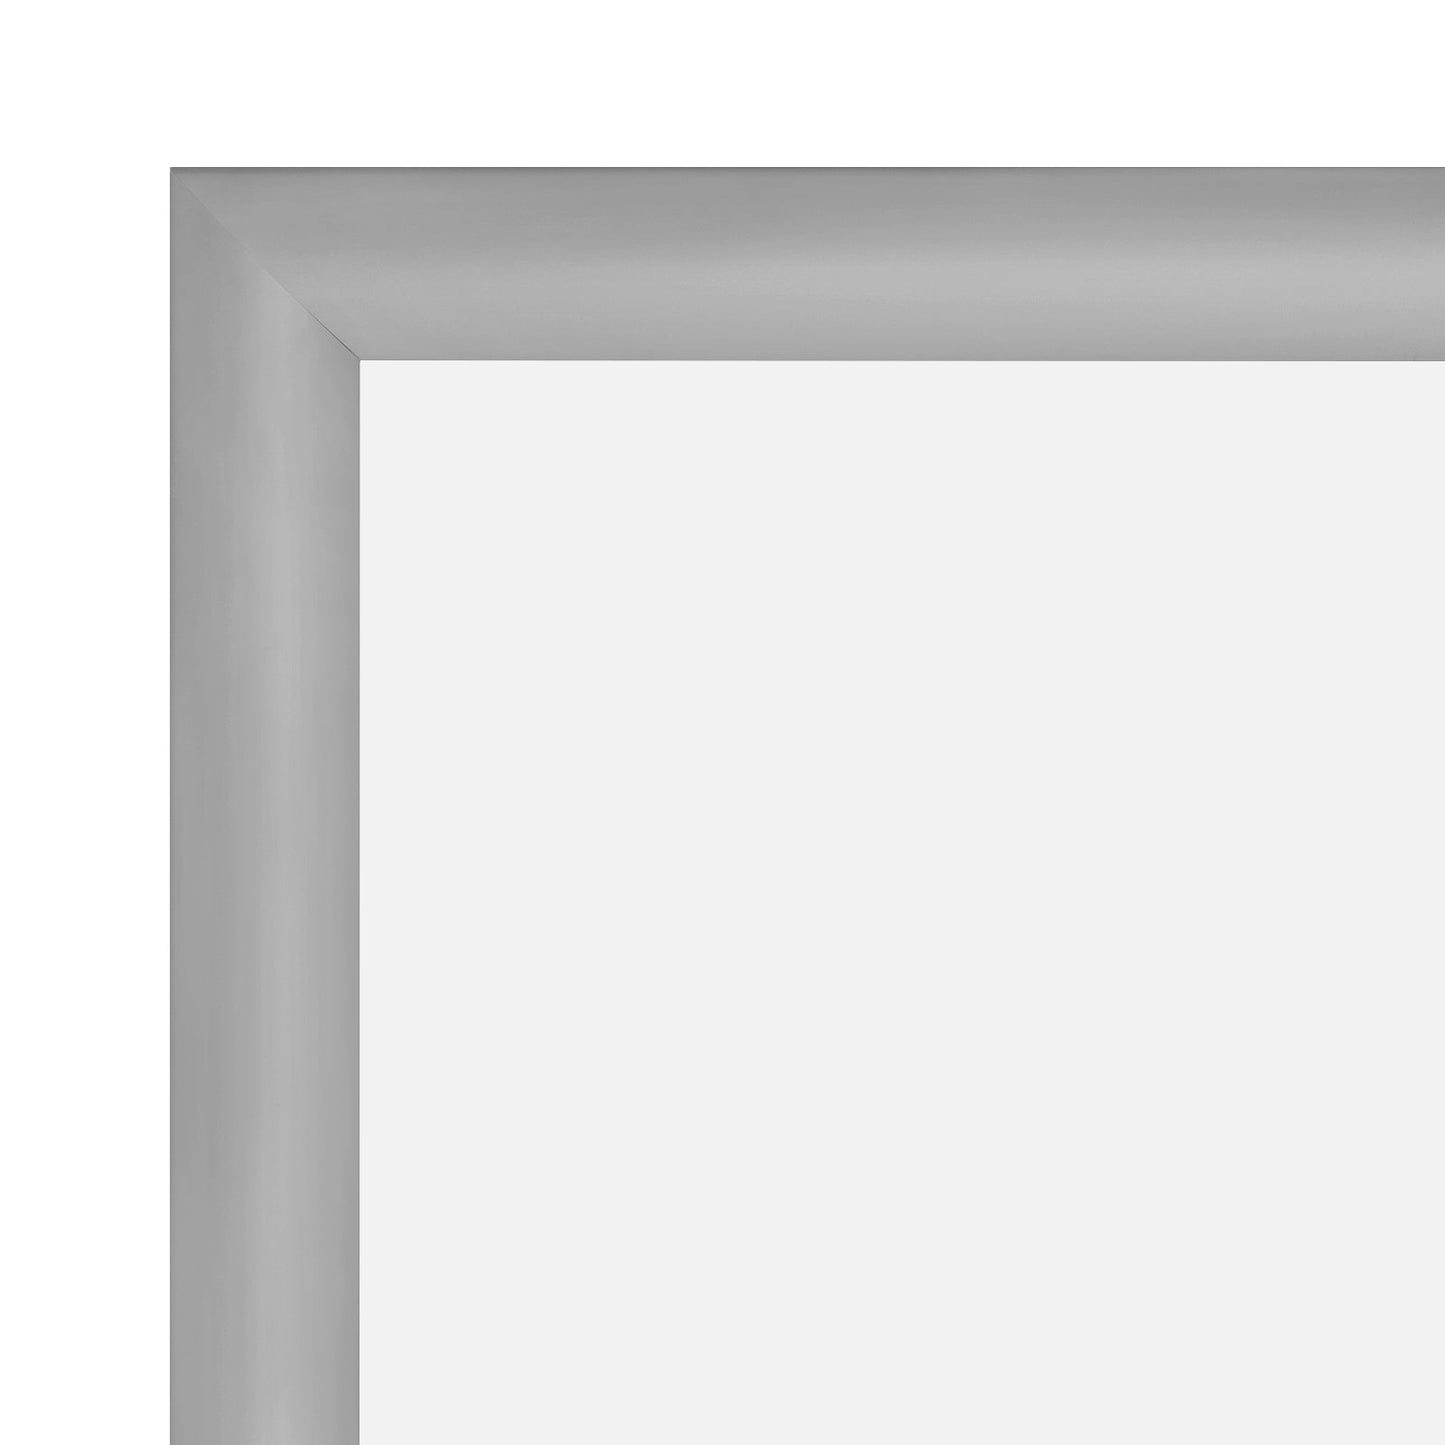 14x24 Silver SnapeZo® Snap Frame - 1.2" Profile - Snap Frames Direct